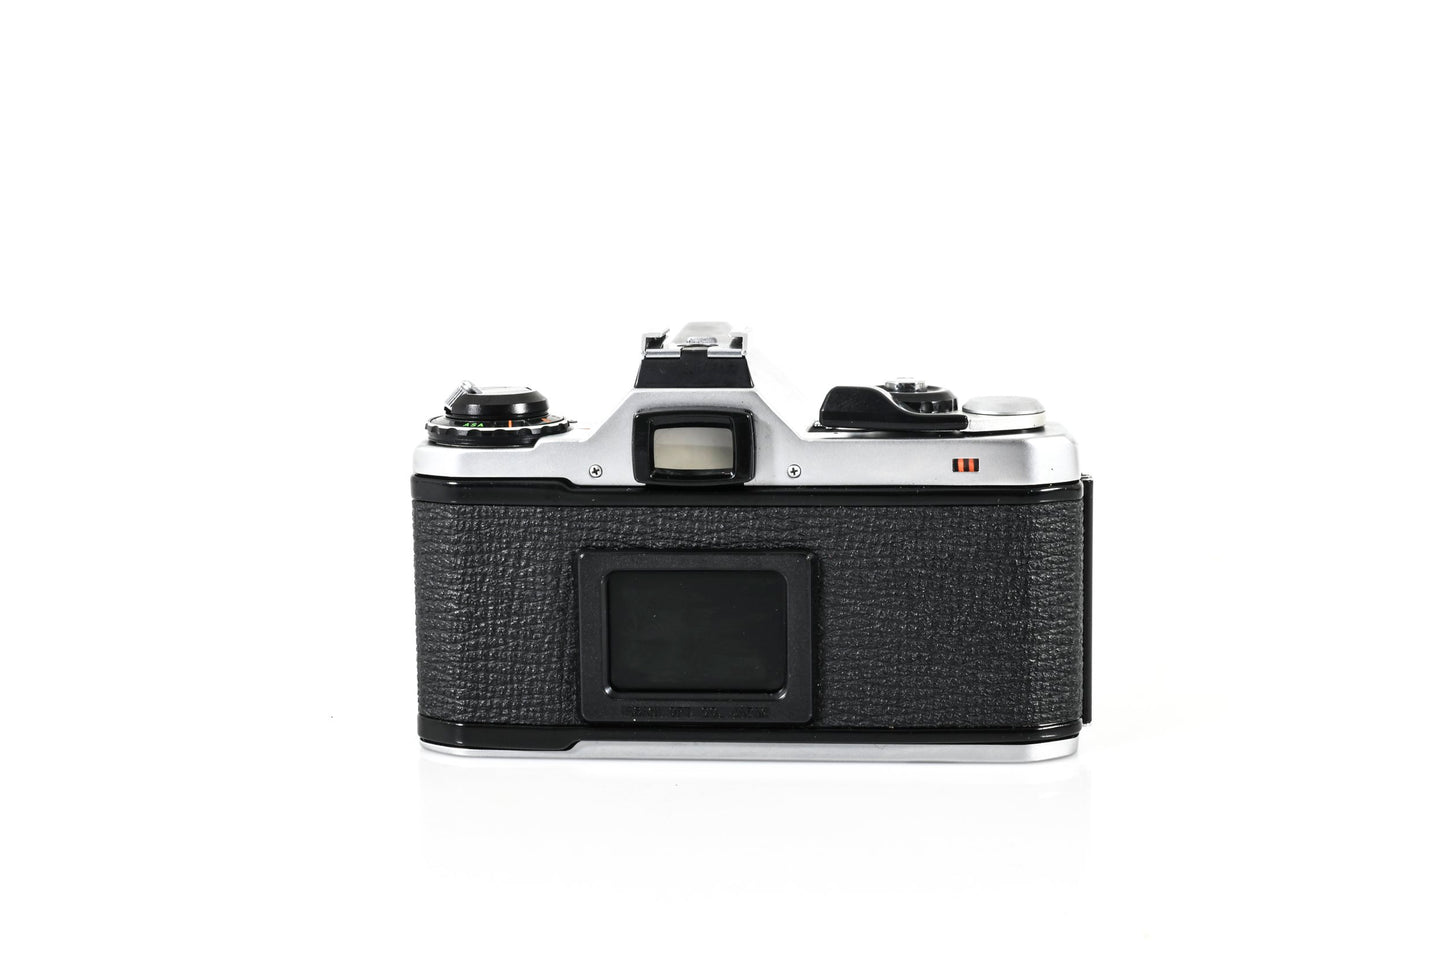 Asahi Pentax ME 35mm SLR Film Camera with 28mm RMC Tokina F2.8 Lens